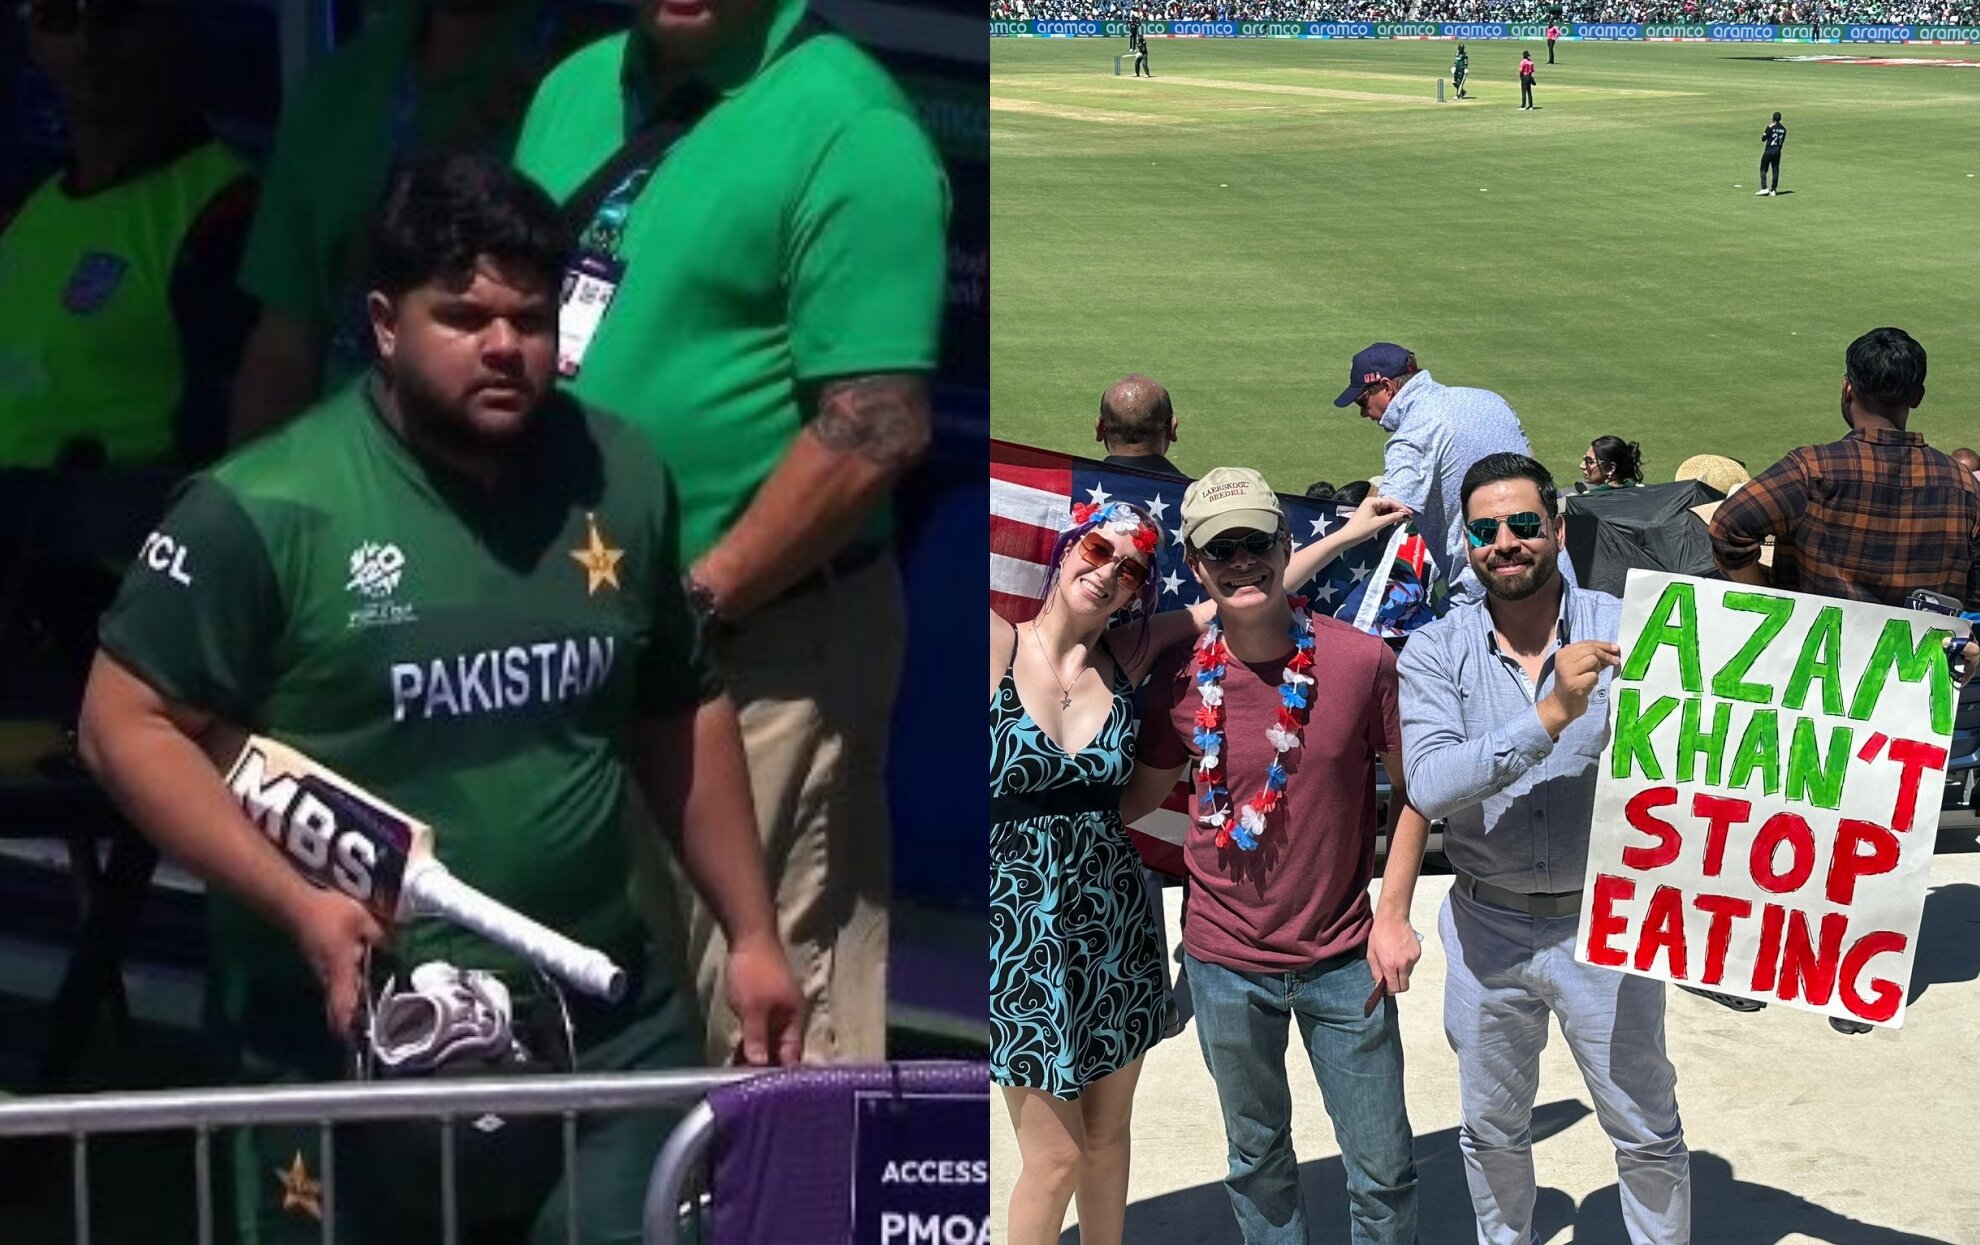 "Azam Khan't stop eating.." Pakistan fans body shame batter during USA